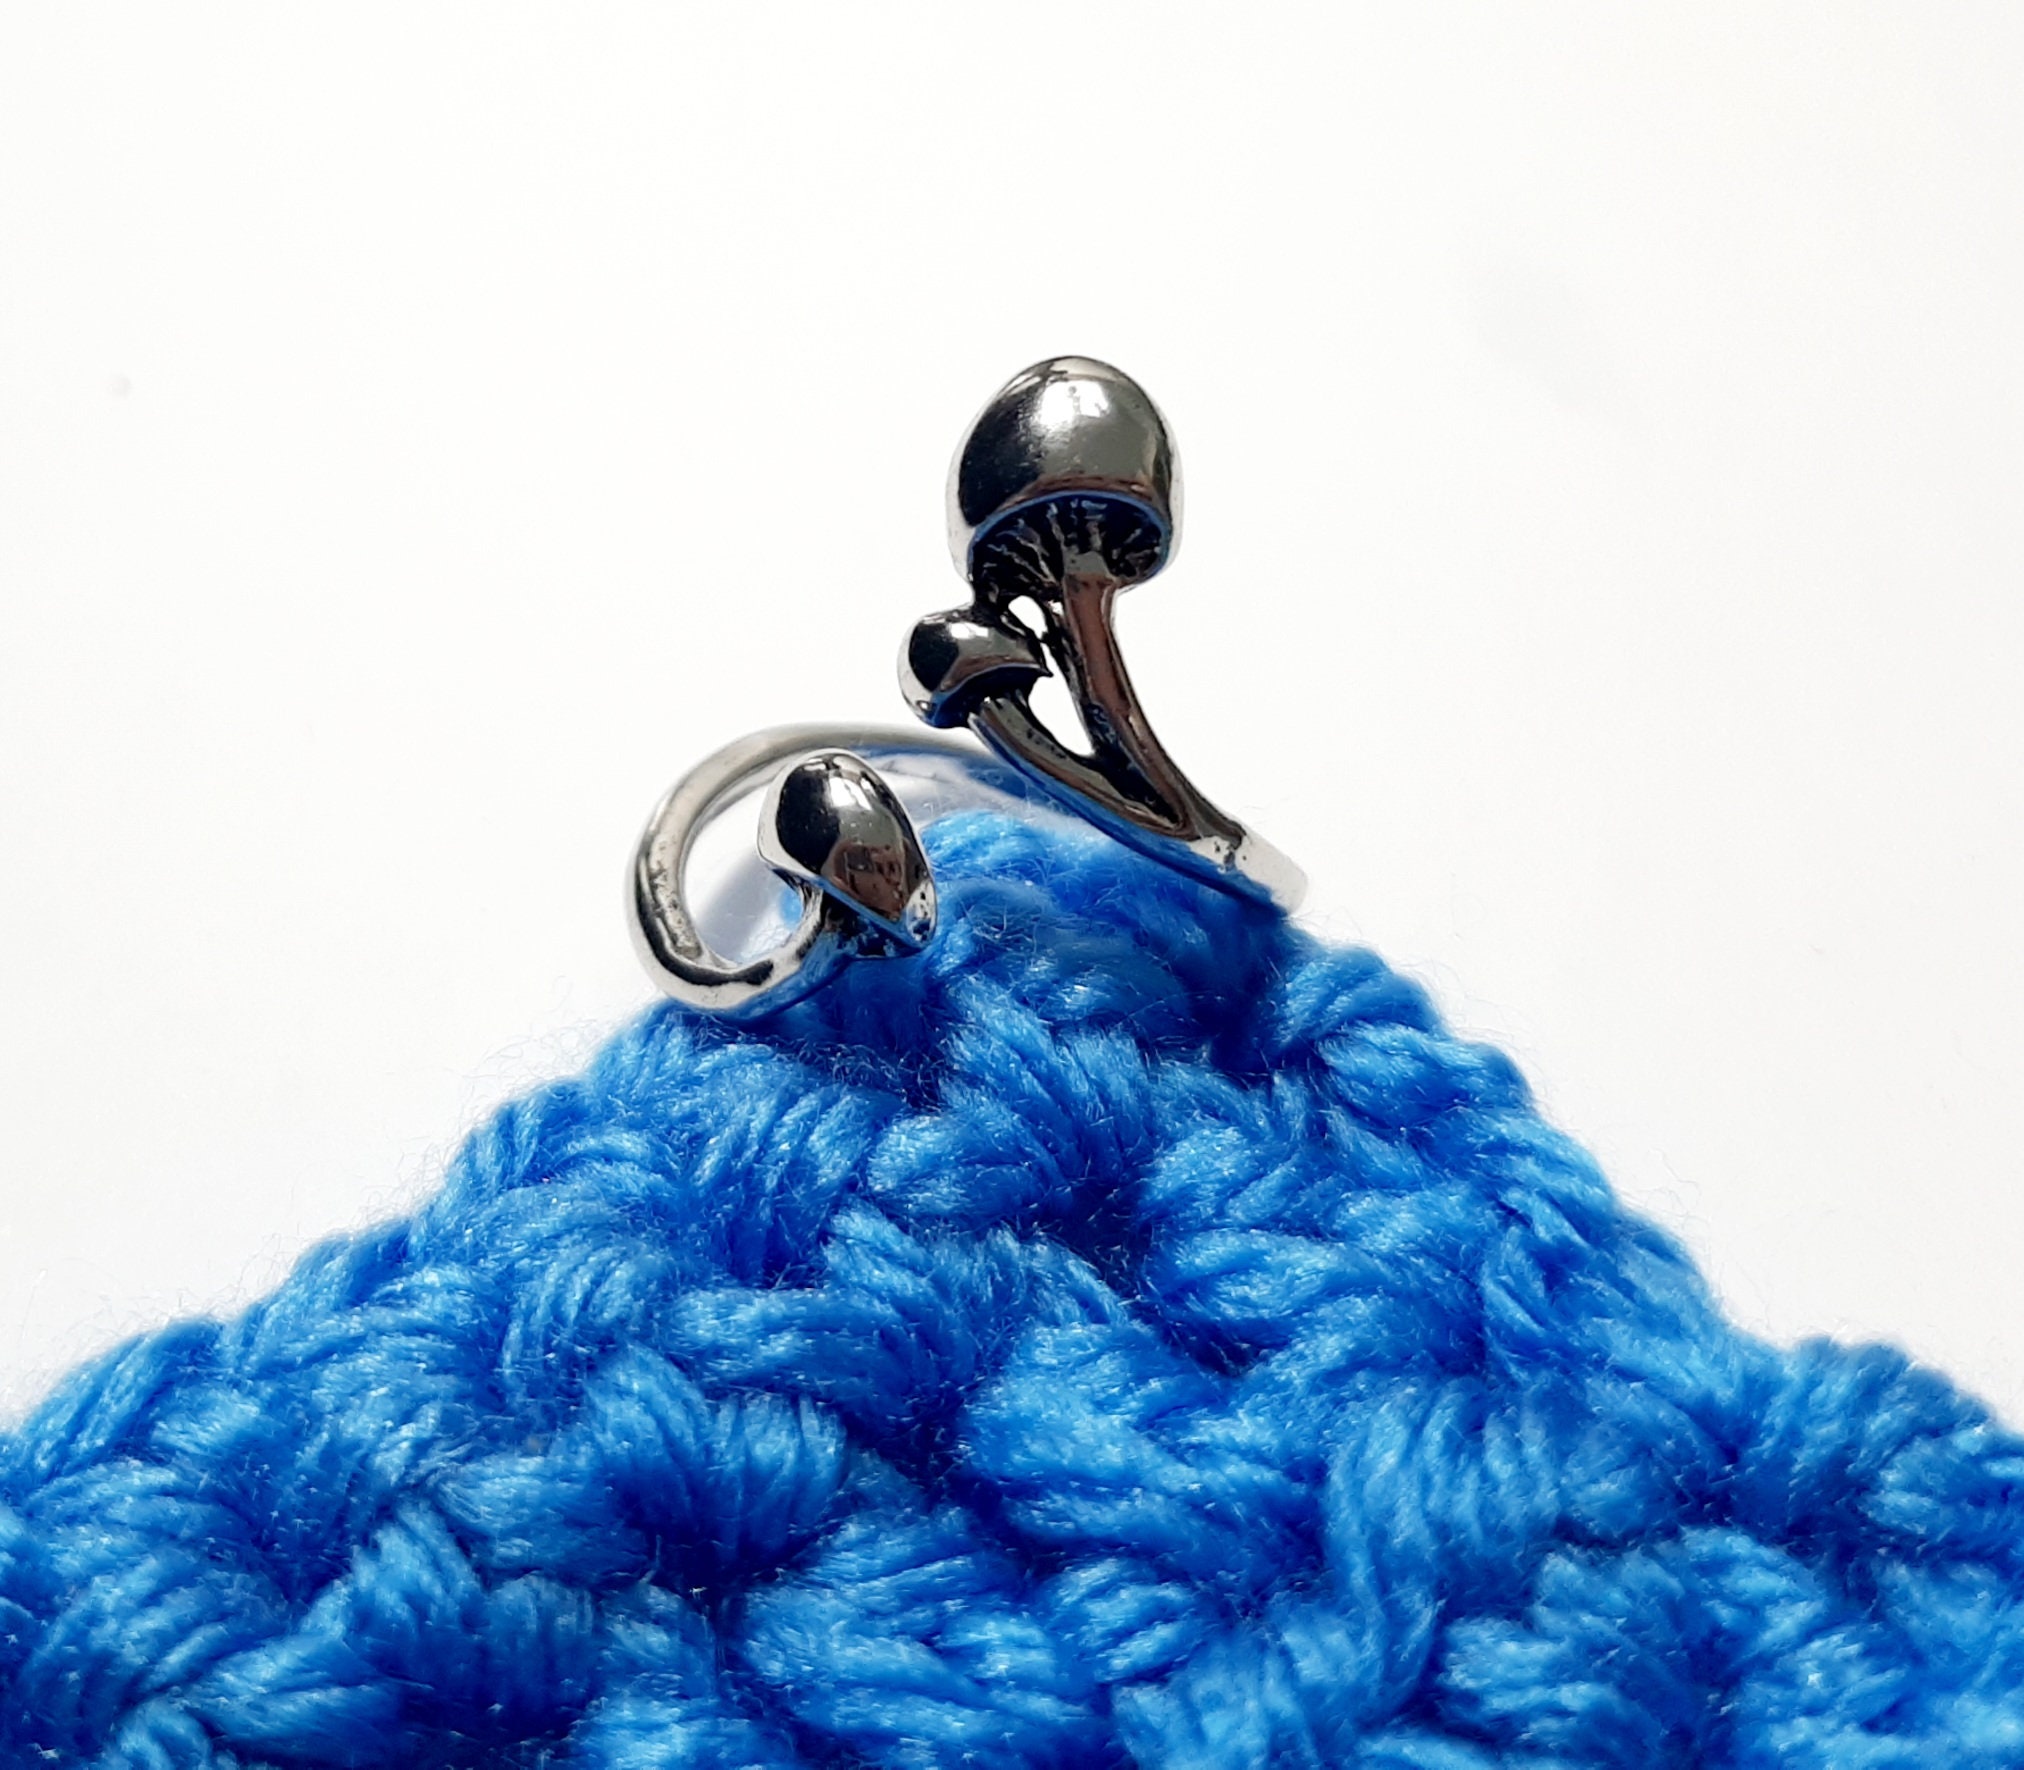 8 Pcs Crochet Ring For Finger Yarn Guide, Adjustable Crochet Tension Knitting Ring, Metal Yarn Holder Crochet